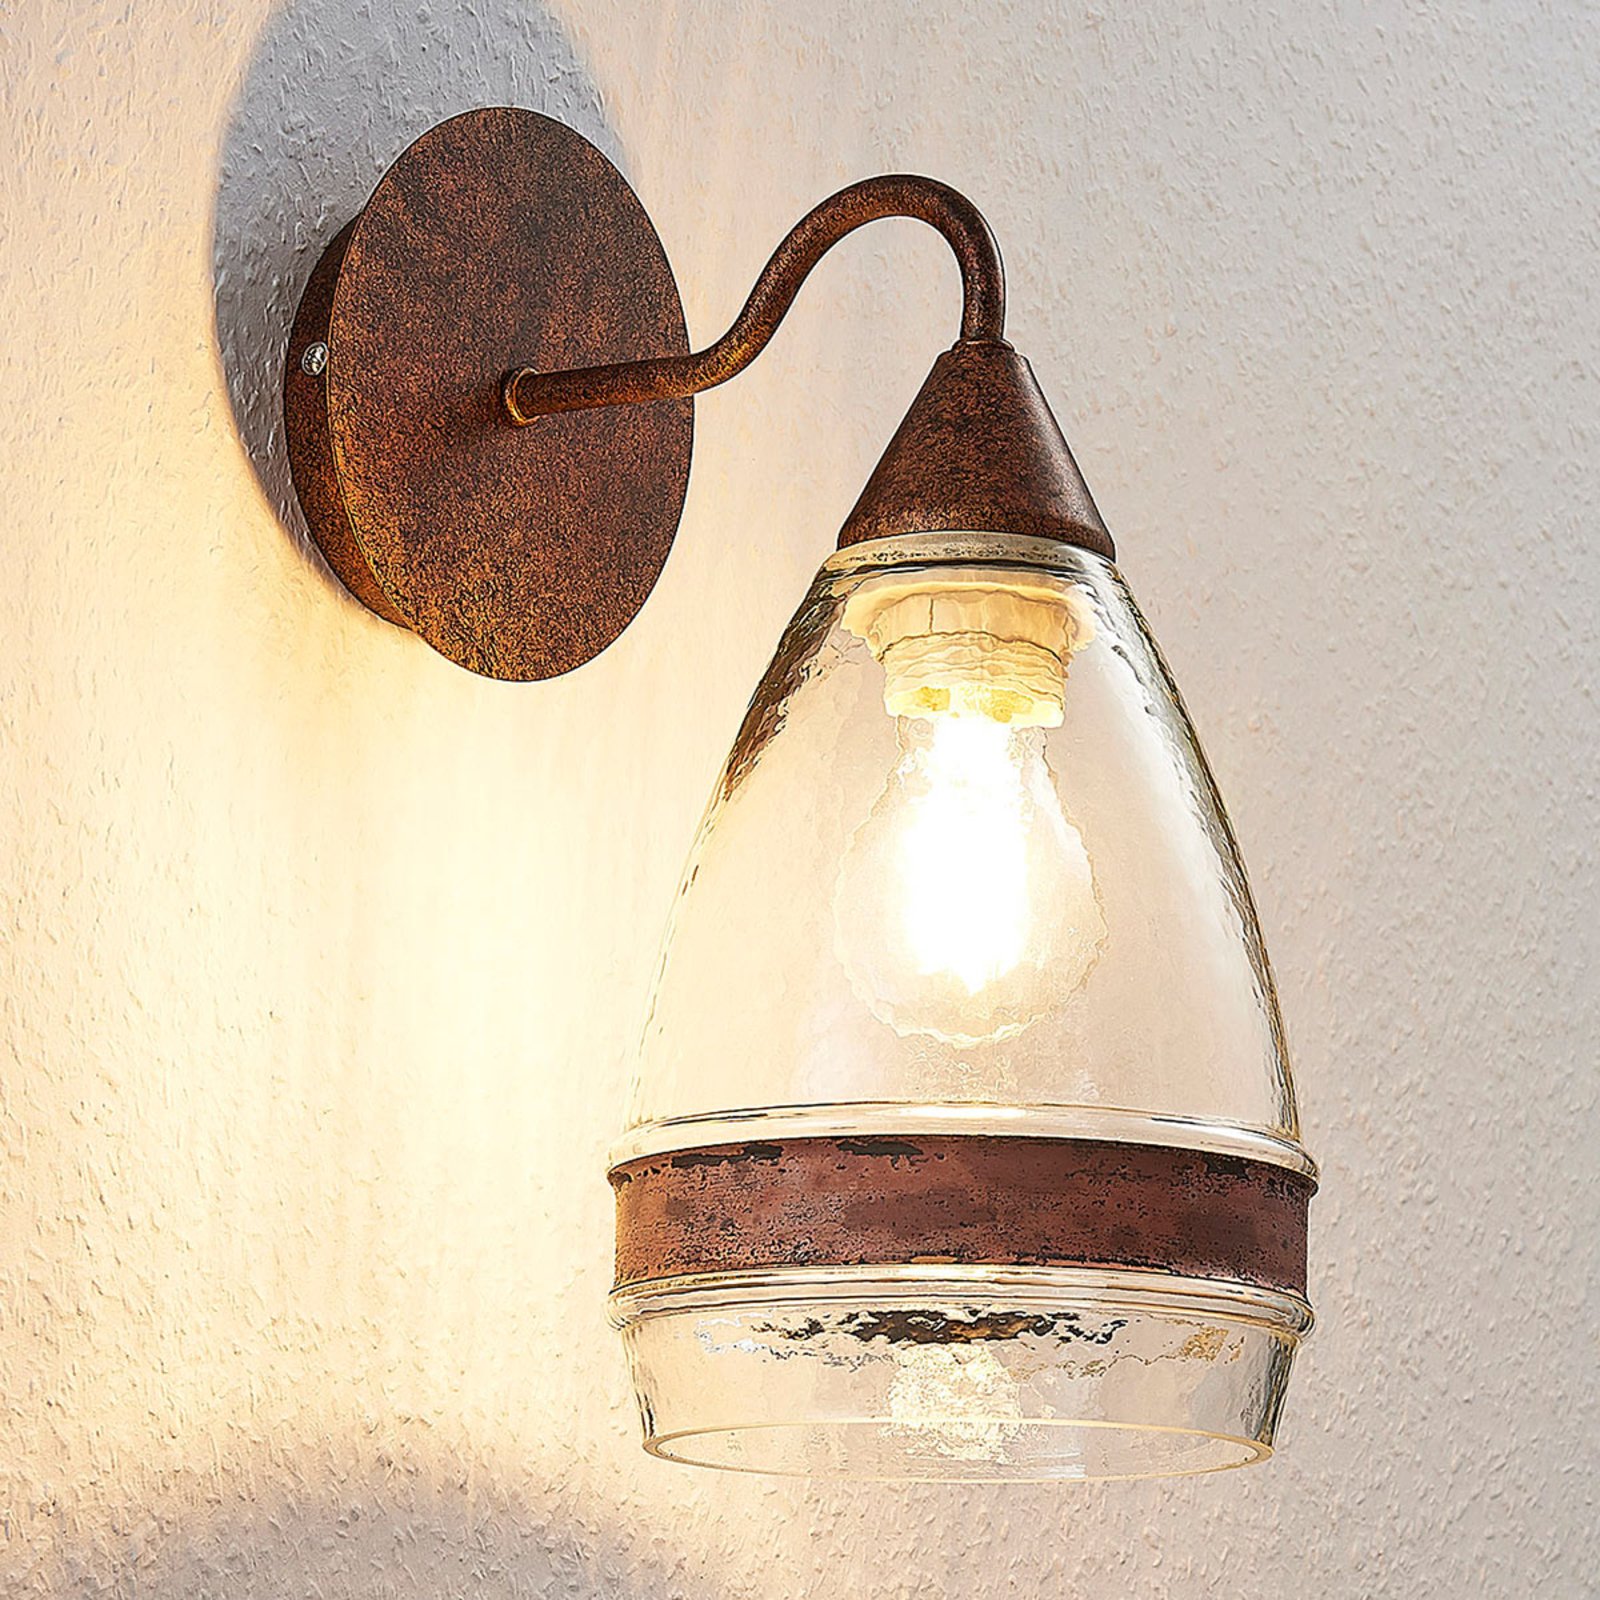 Glas-væglampe Millina, rustbrun